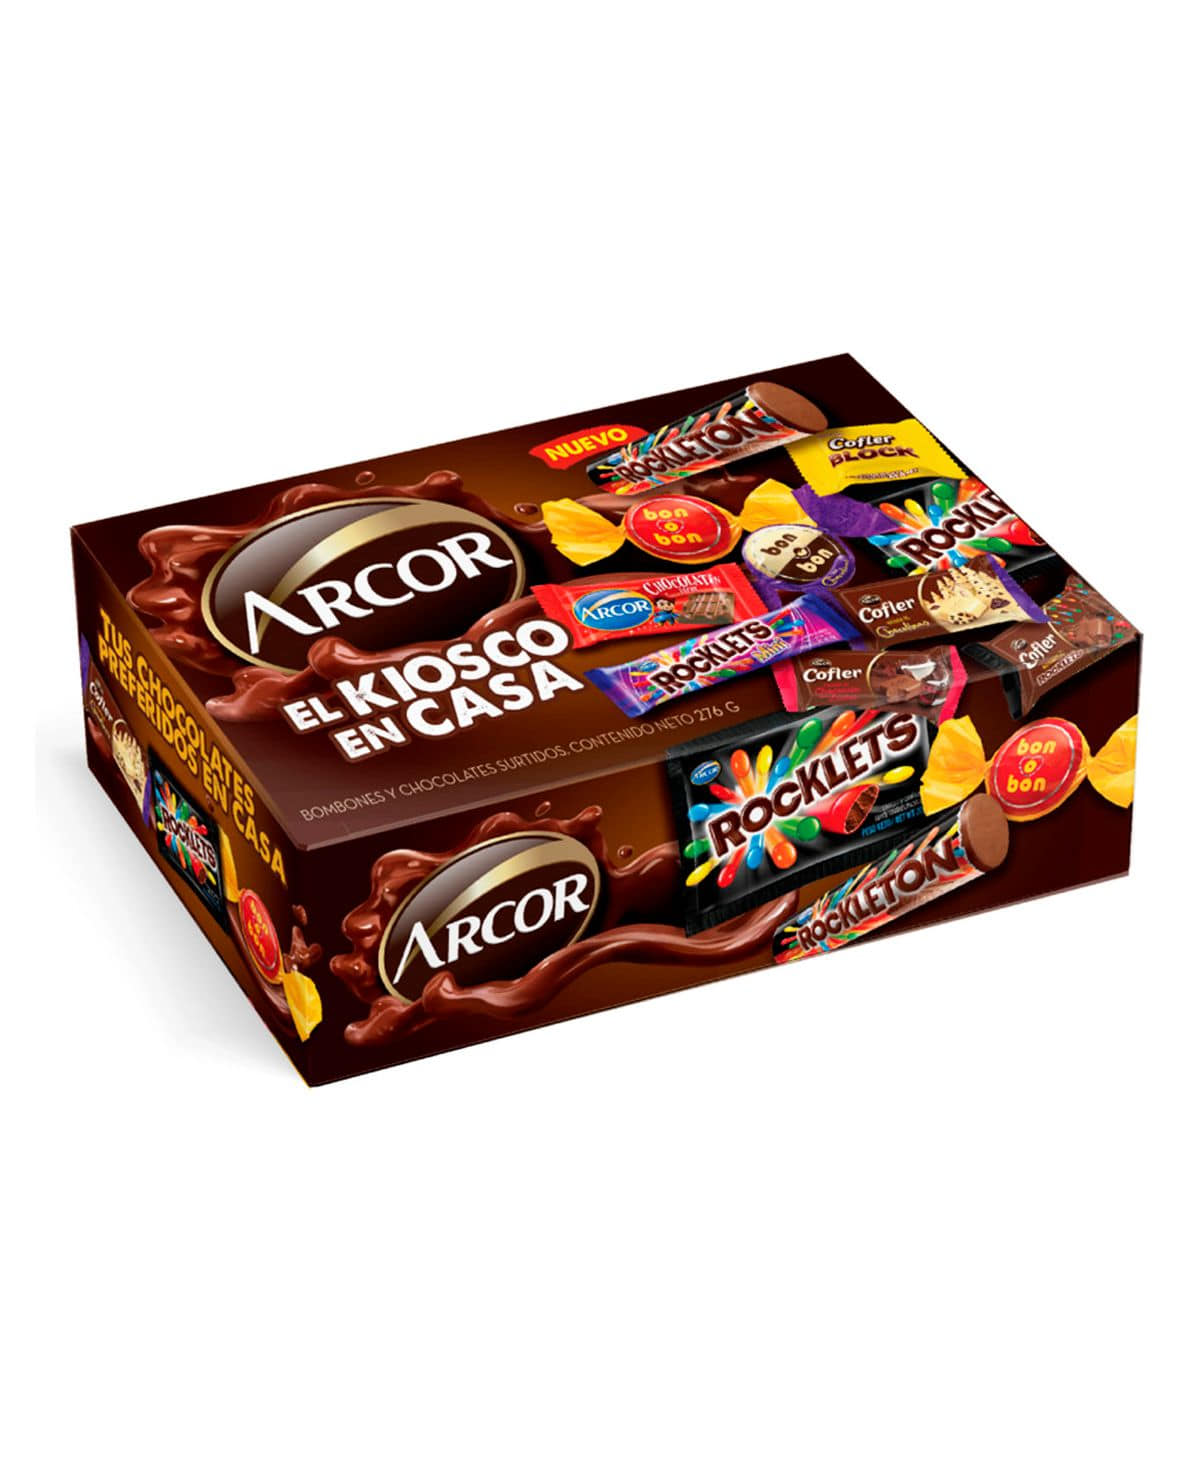 Chocolates Arcor El Kiosko en Casa caja 246 Gr